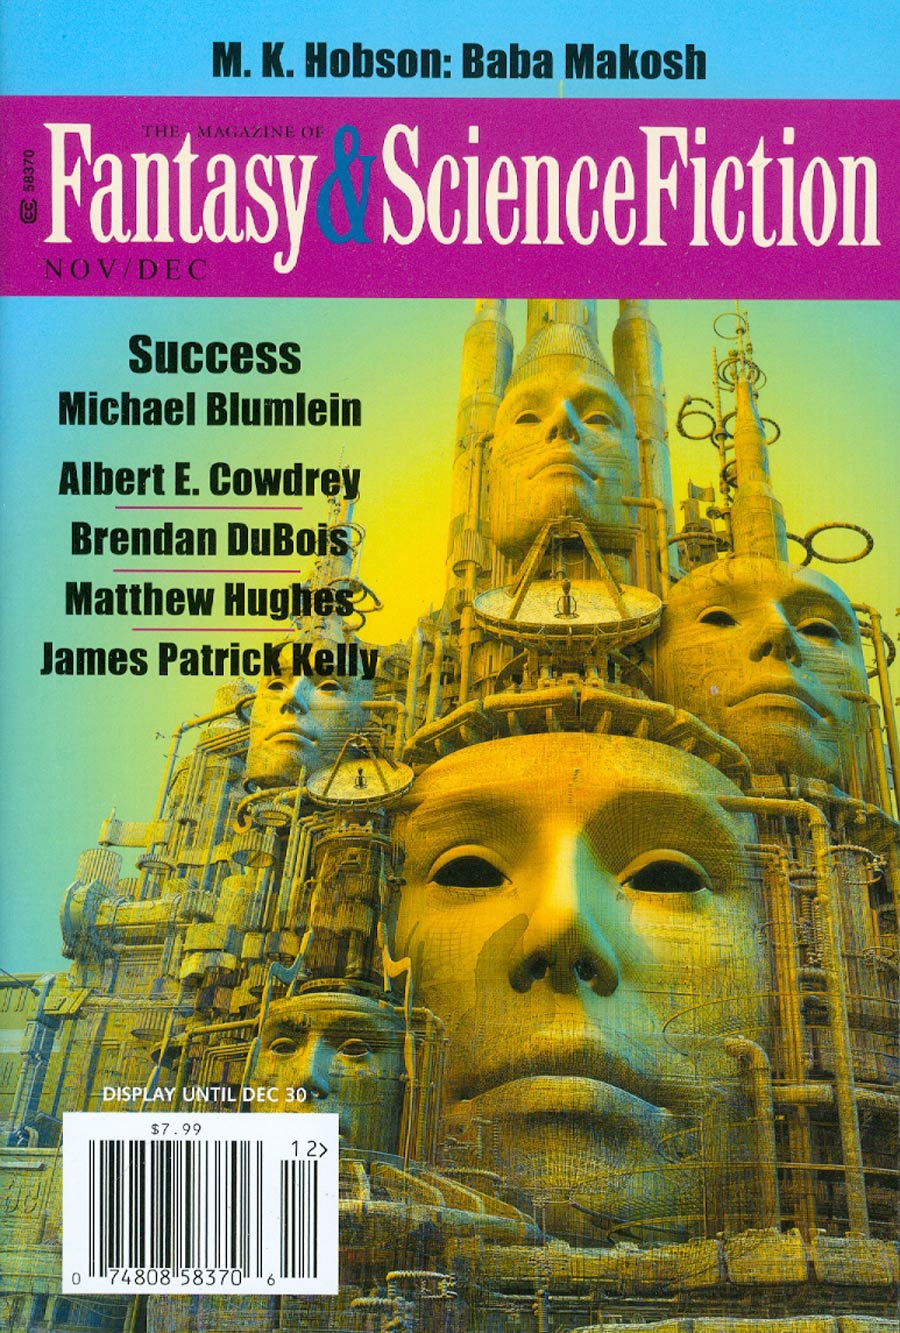 Fantasy & Science Fiction Digest Vol 125 #5 Nov / #6 Dec 2013